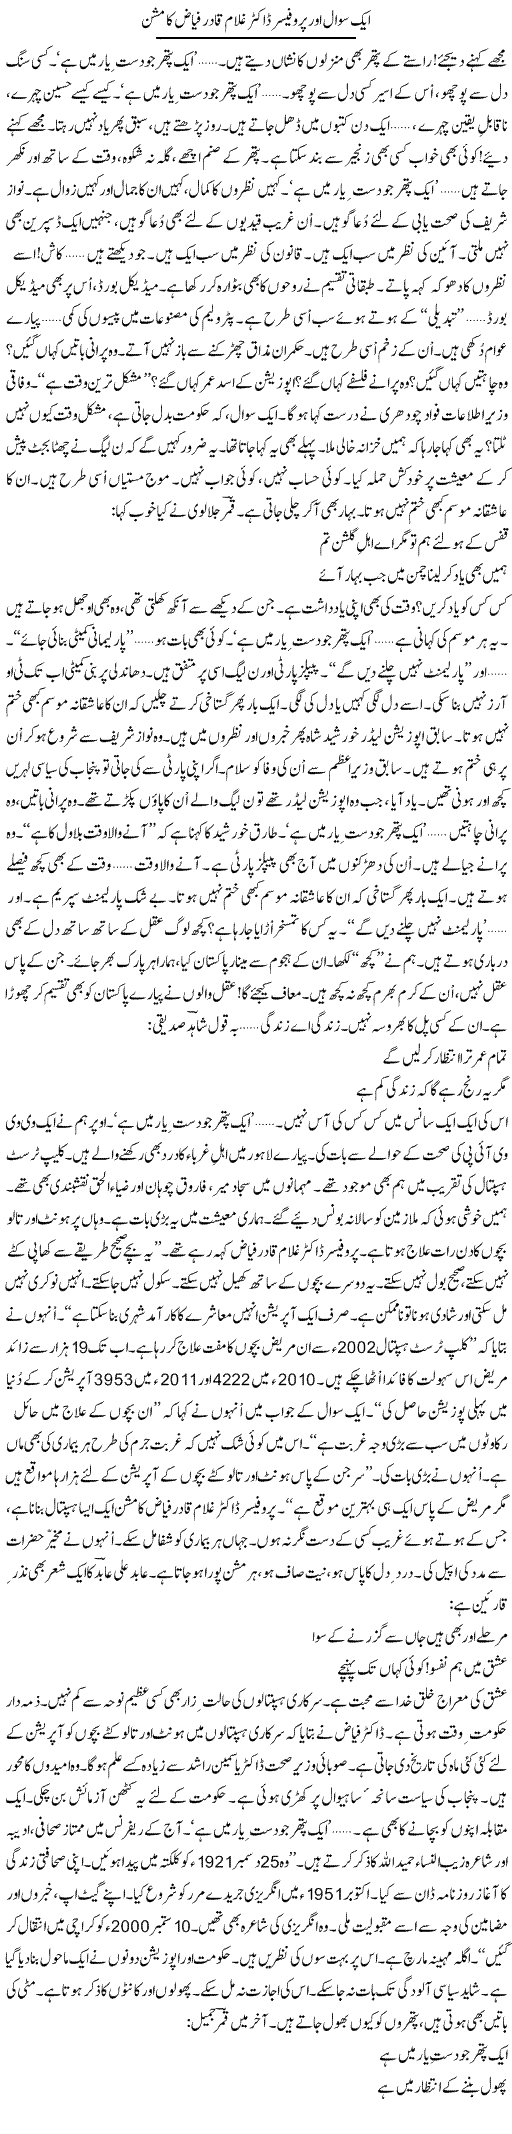 Aik Sawal Aur Professor Dr. Ghulam Qadir Fayyaz Ka Mission | Ejaz Hafeez Khan | Daily Urdu Columns